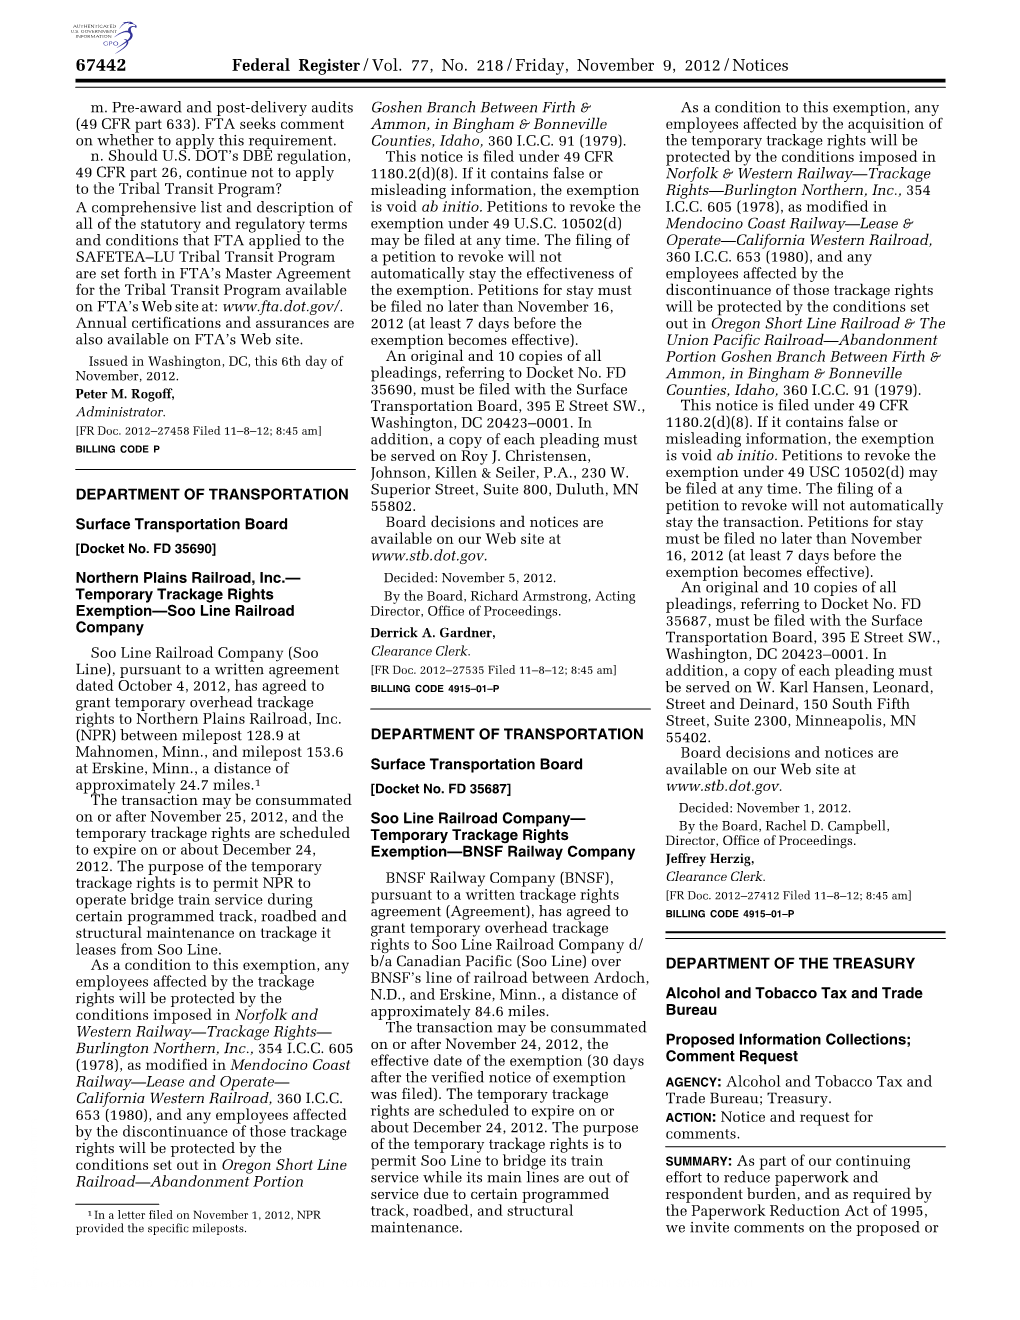 Federal Register/Vol. 77, No. 218/Friday, November 9, 2012/Notices